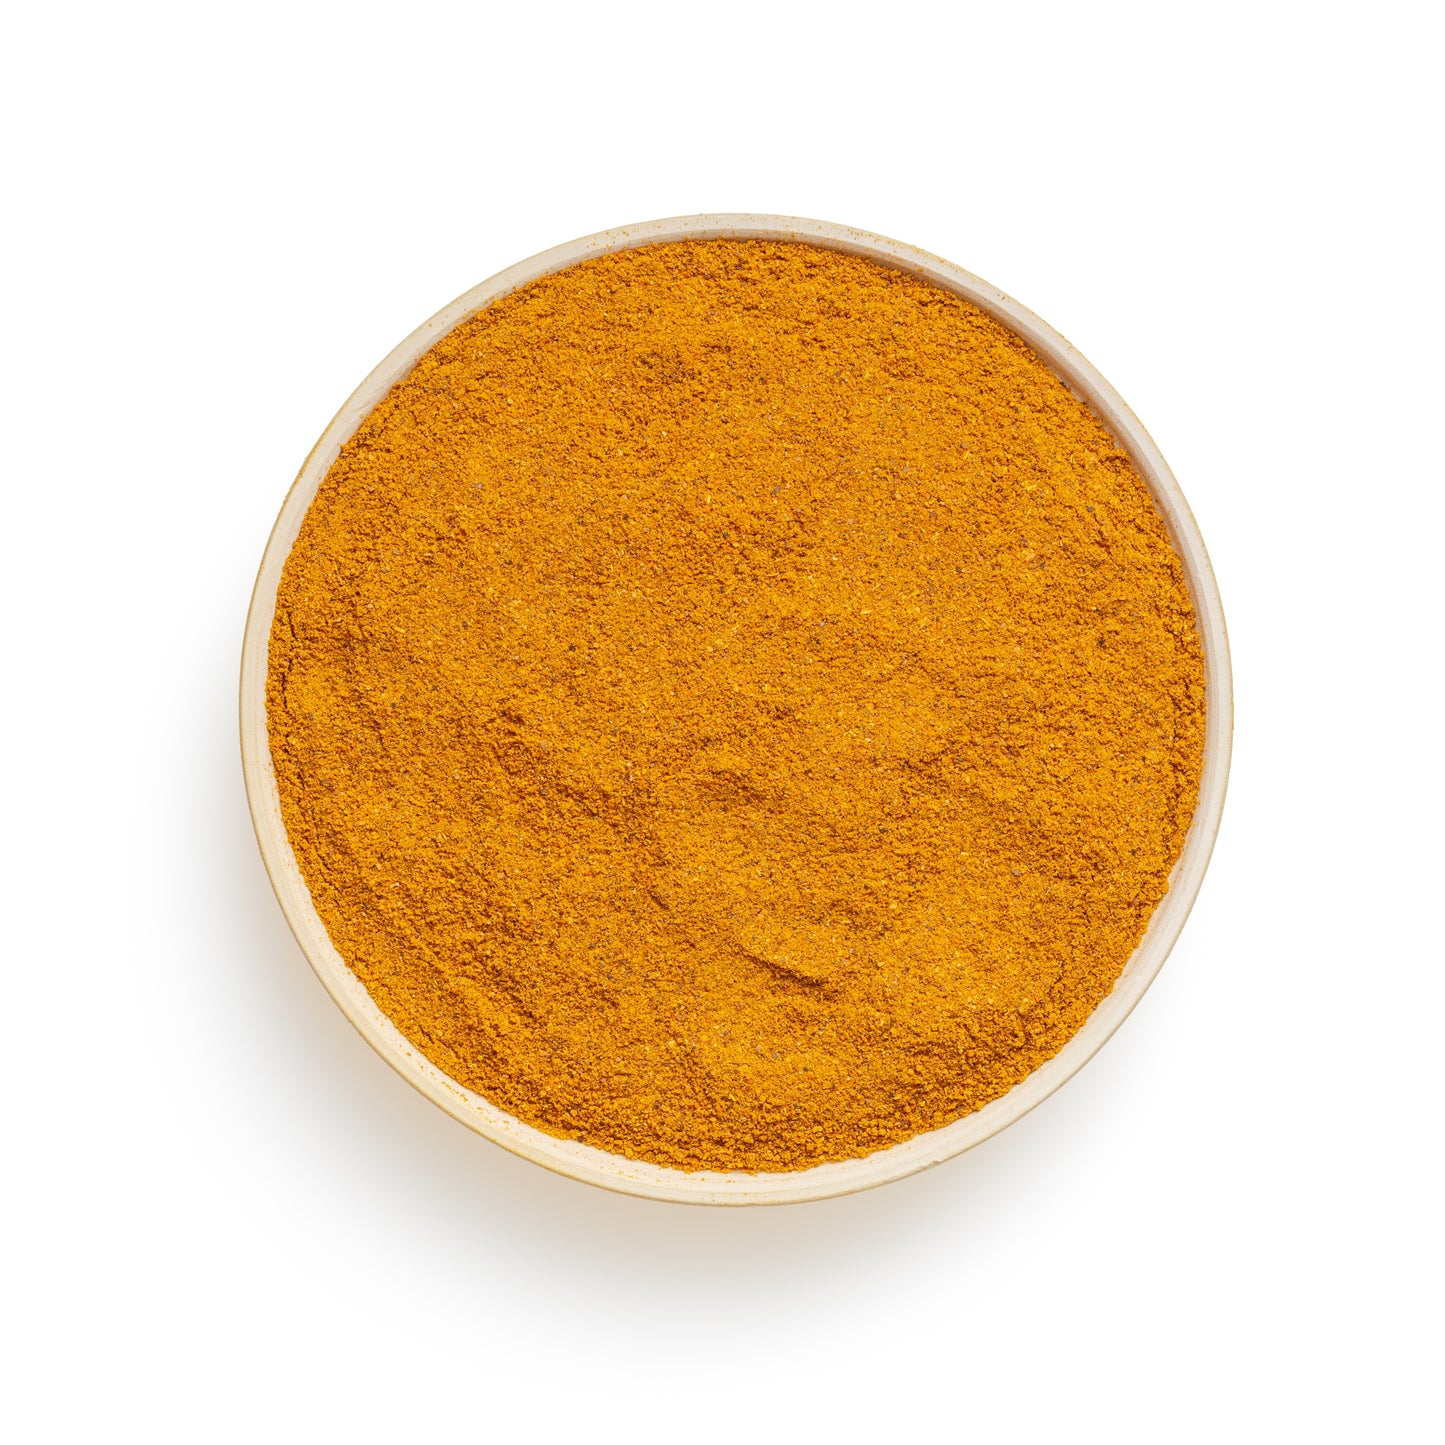 Organic Turmeric Powder - 200gms